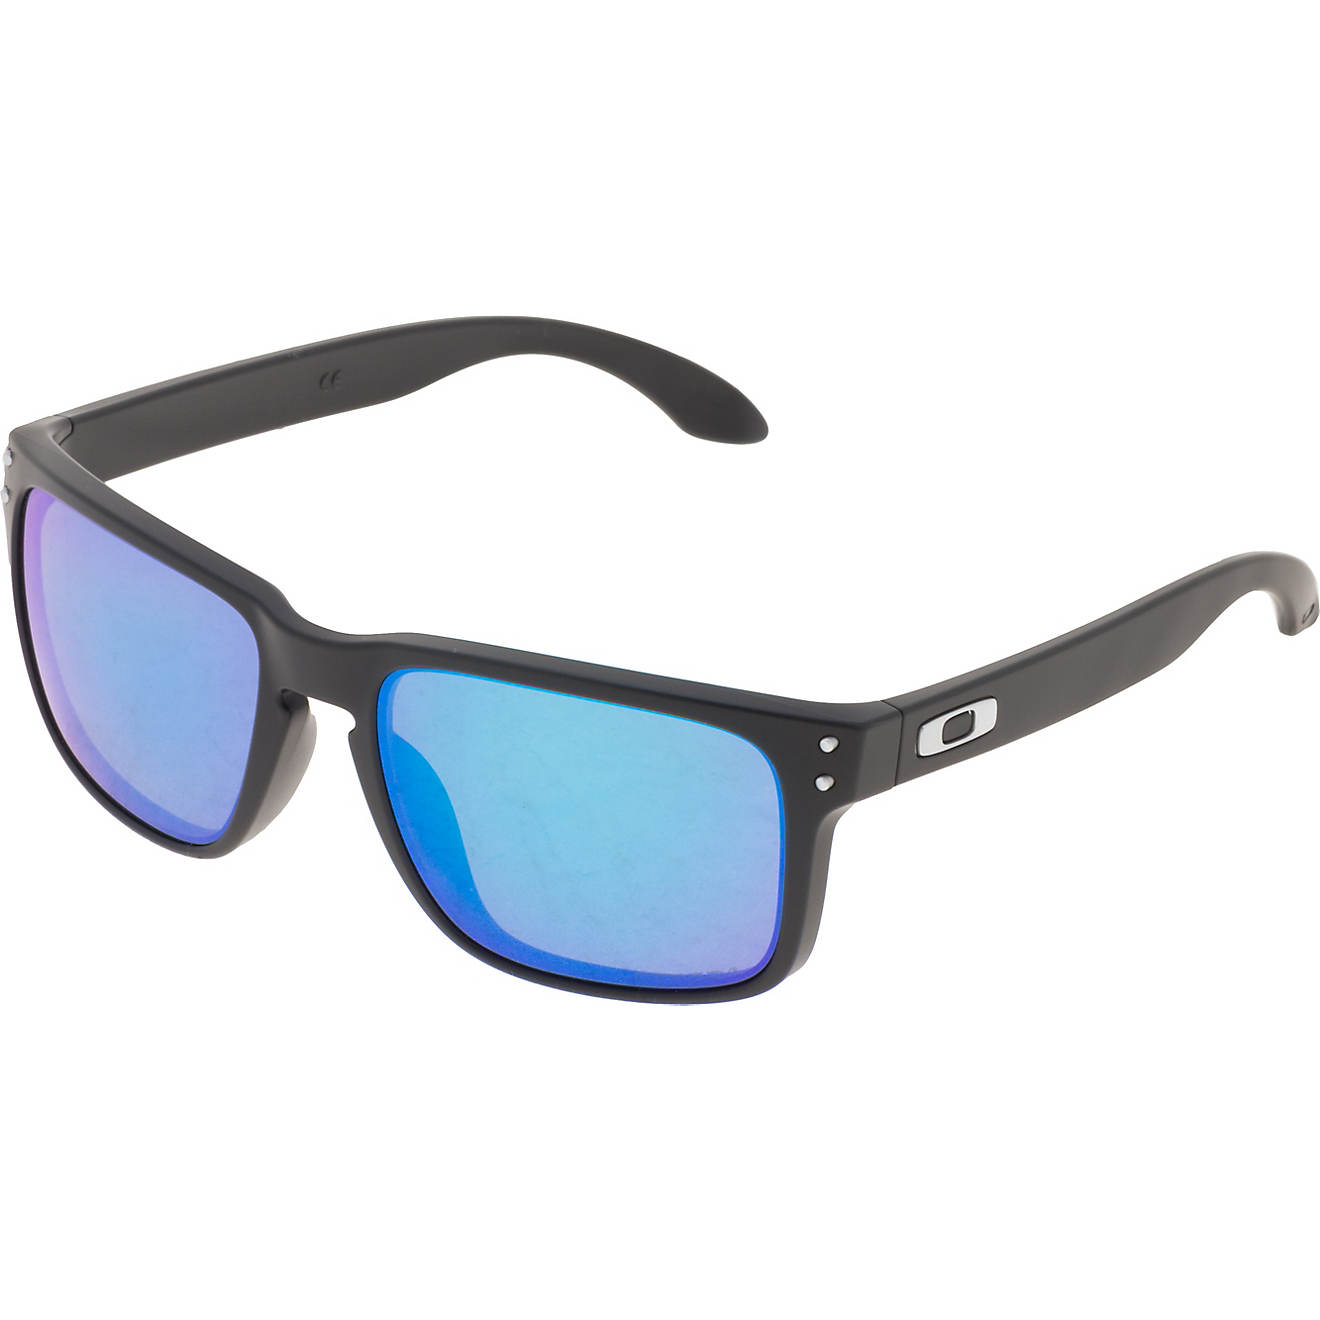 Sunday specify anger Oakley Holbrook Polarized Sunglasses | Academy